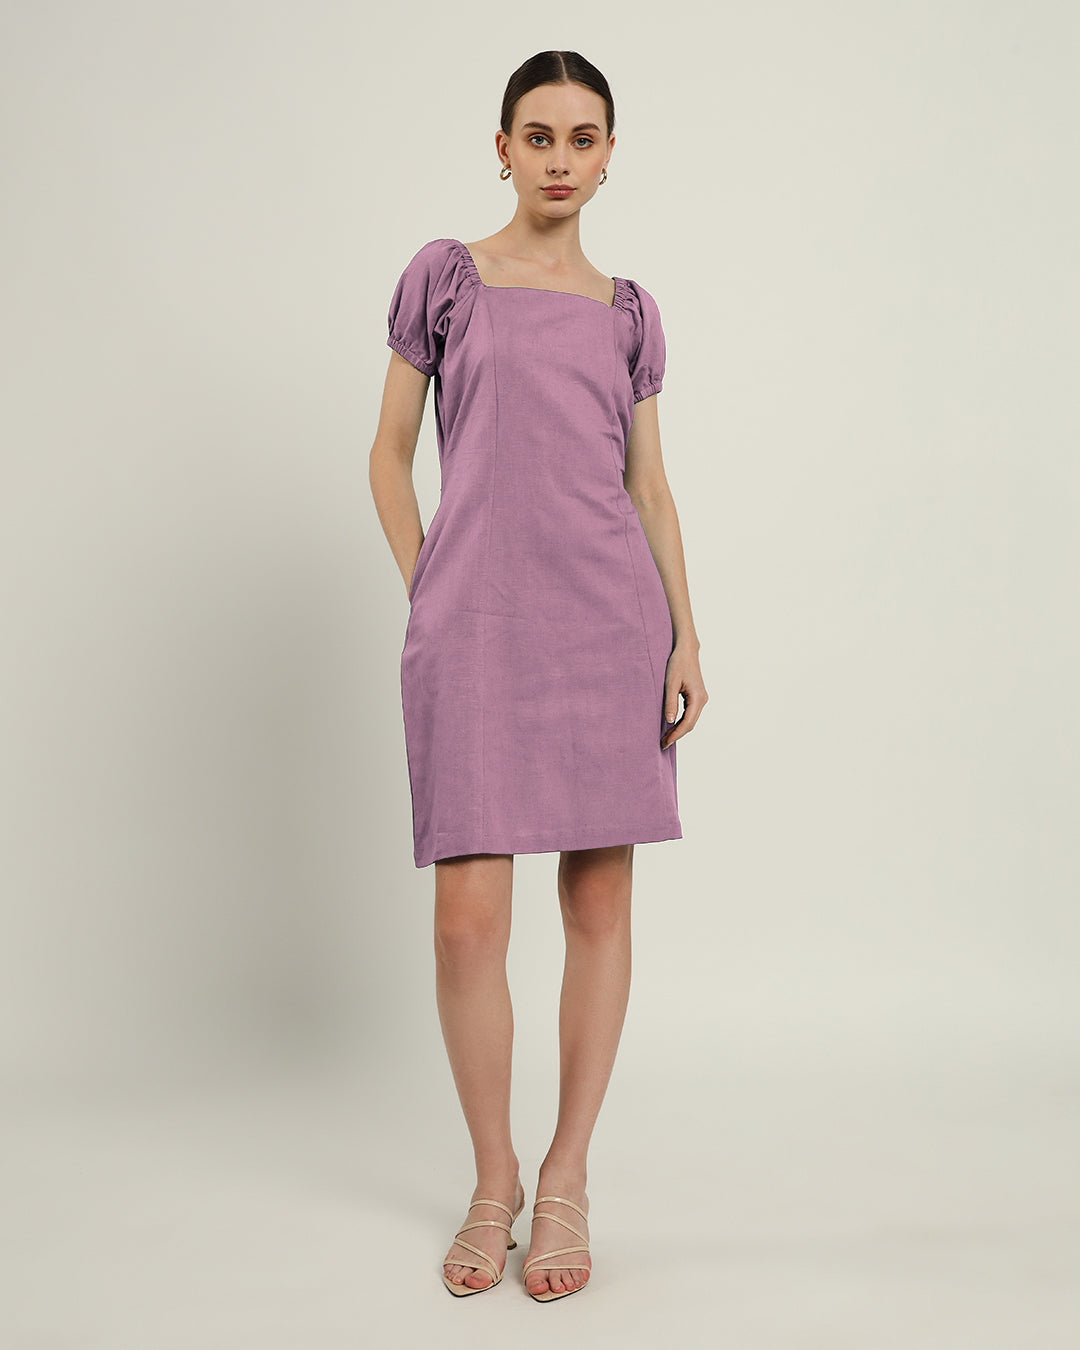 The Arar Purple Swirl Dress